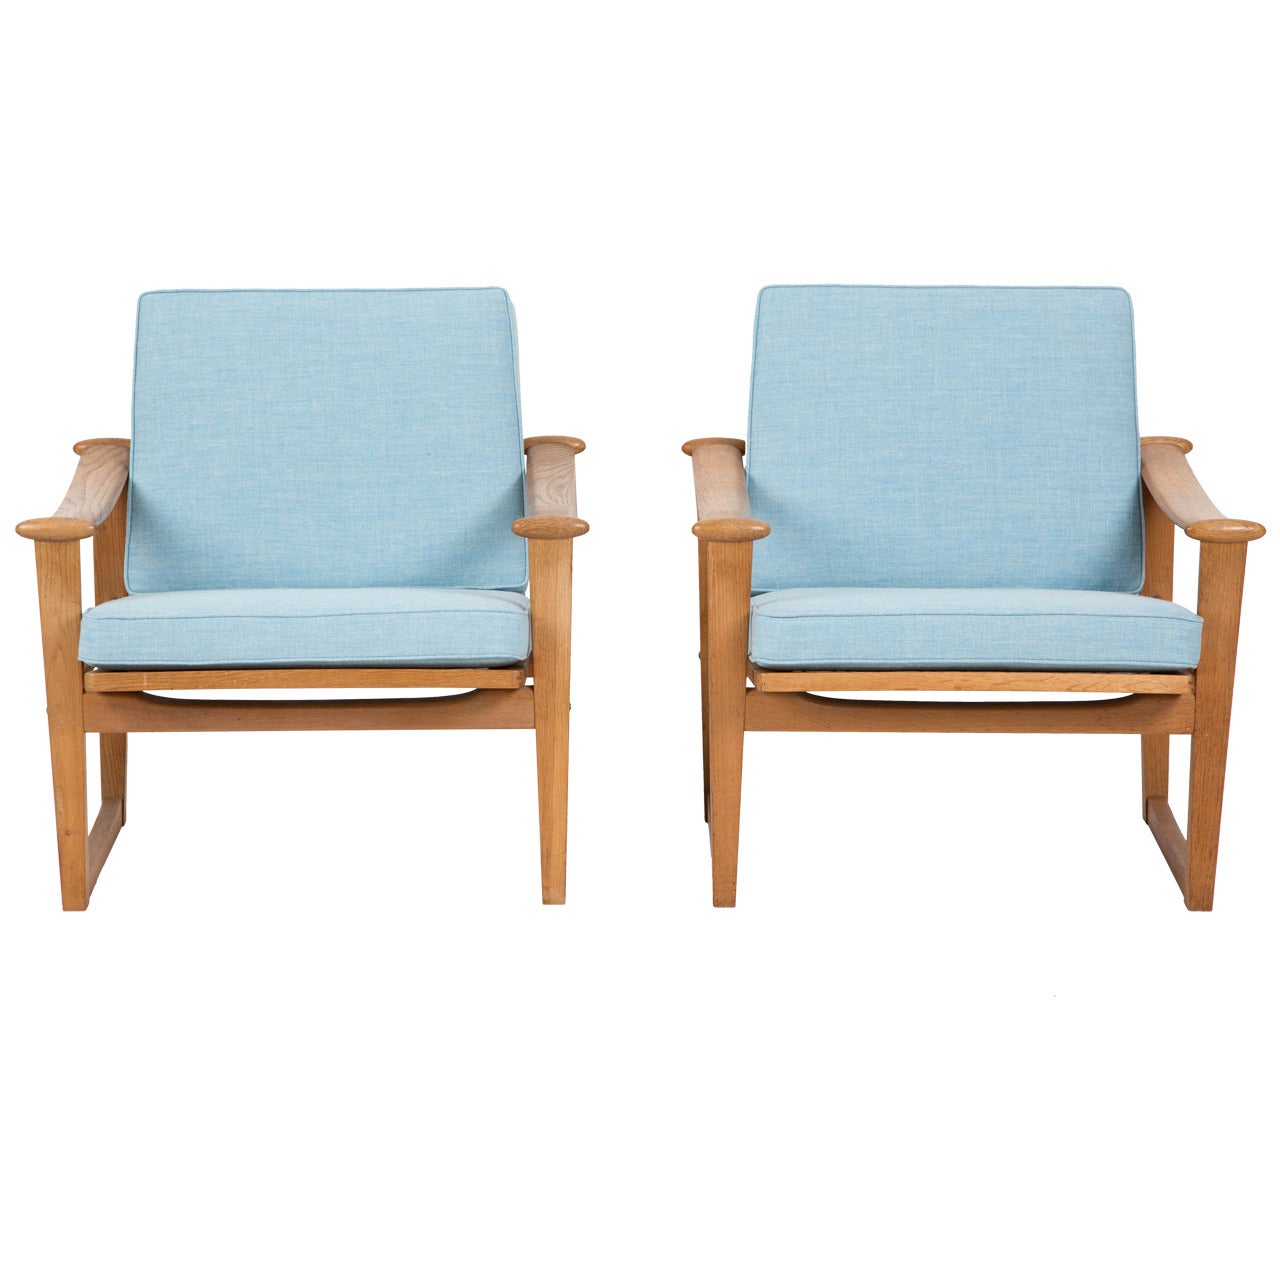 In the style of Finn Juhl Set of Oak Chairs for Pastoe designed by Nissen For Sale